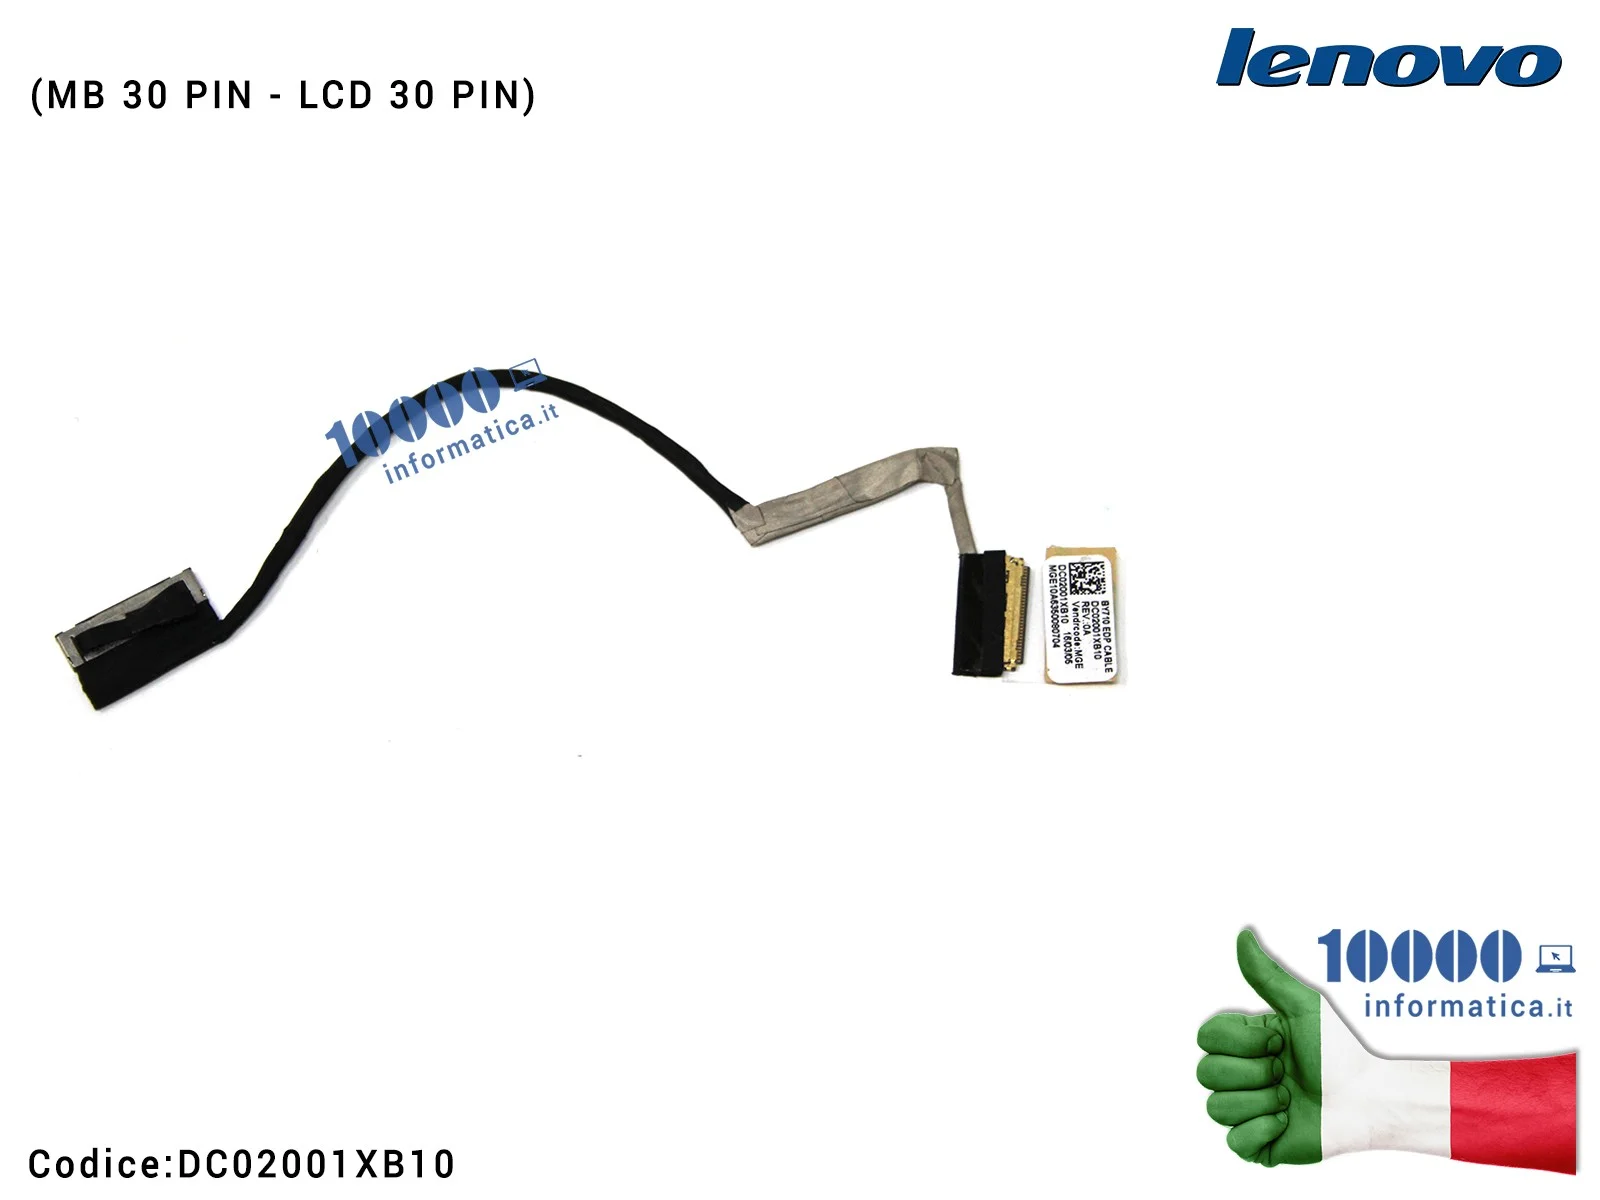 DC02001XB10 Cavo Flat LCD LENOVO IdeaPad Y700-17ISK Y700 (Motherboard 30 PIN - LCD 30 PIN) DC02001XB10